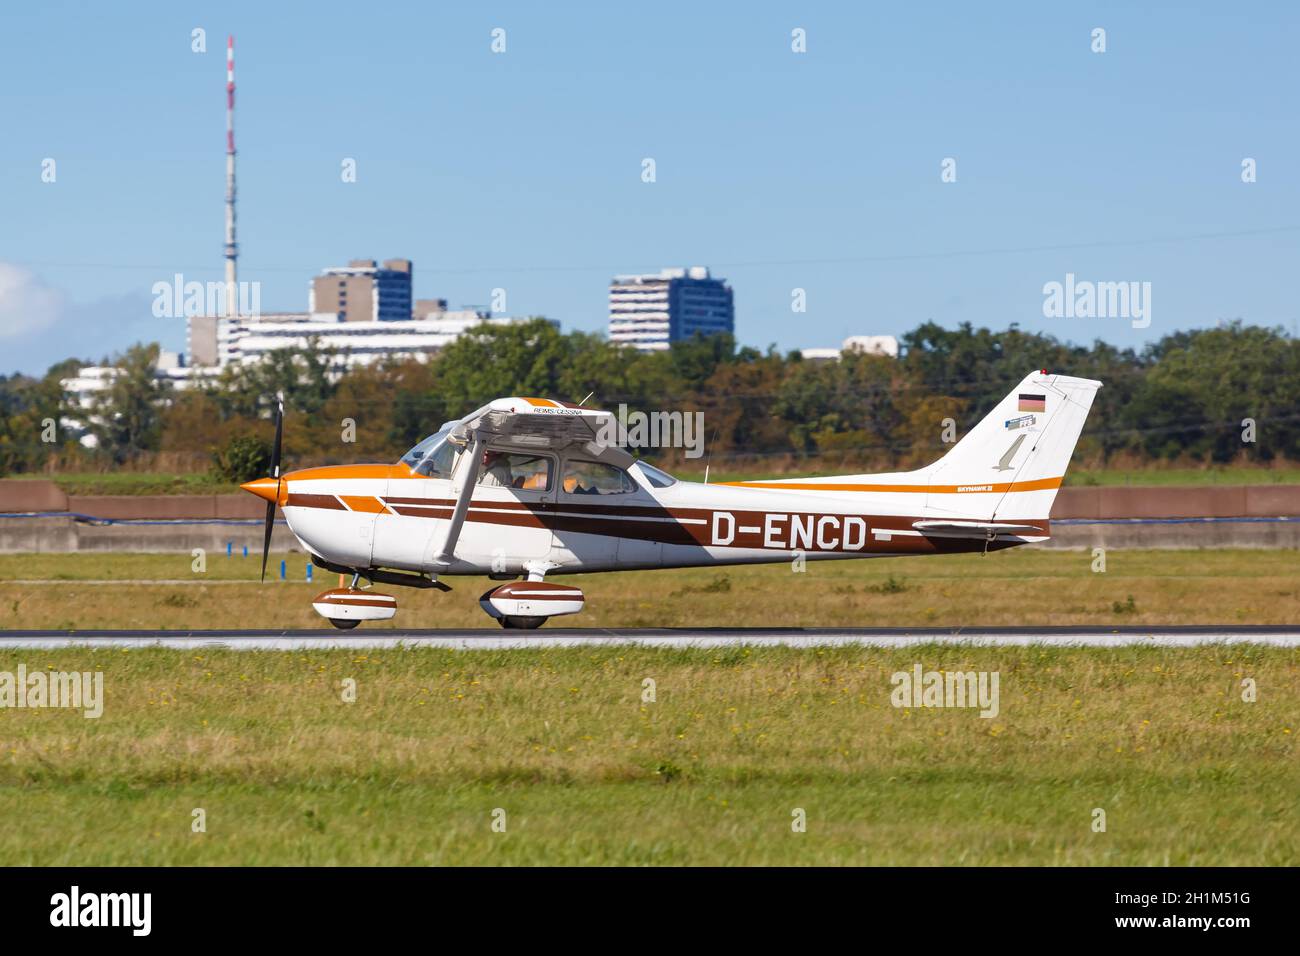 Stuttgart, Germany - October 4, 2020: Reims-Cessna F172N Skyhawk II airplane at Stuttgart Airport in Germany. Stock Photo